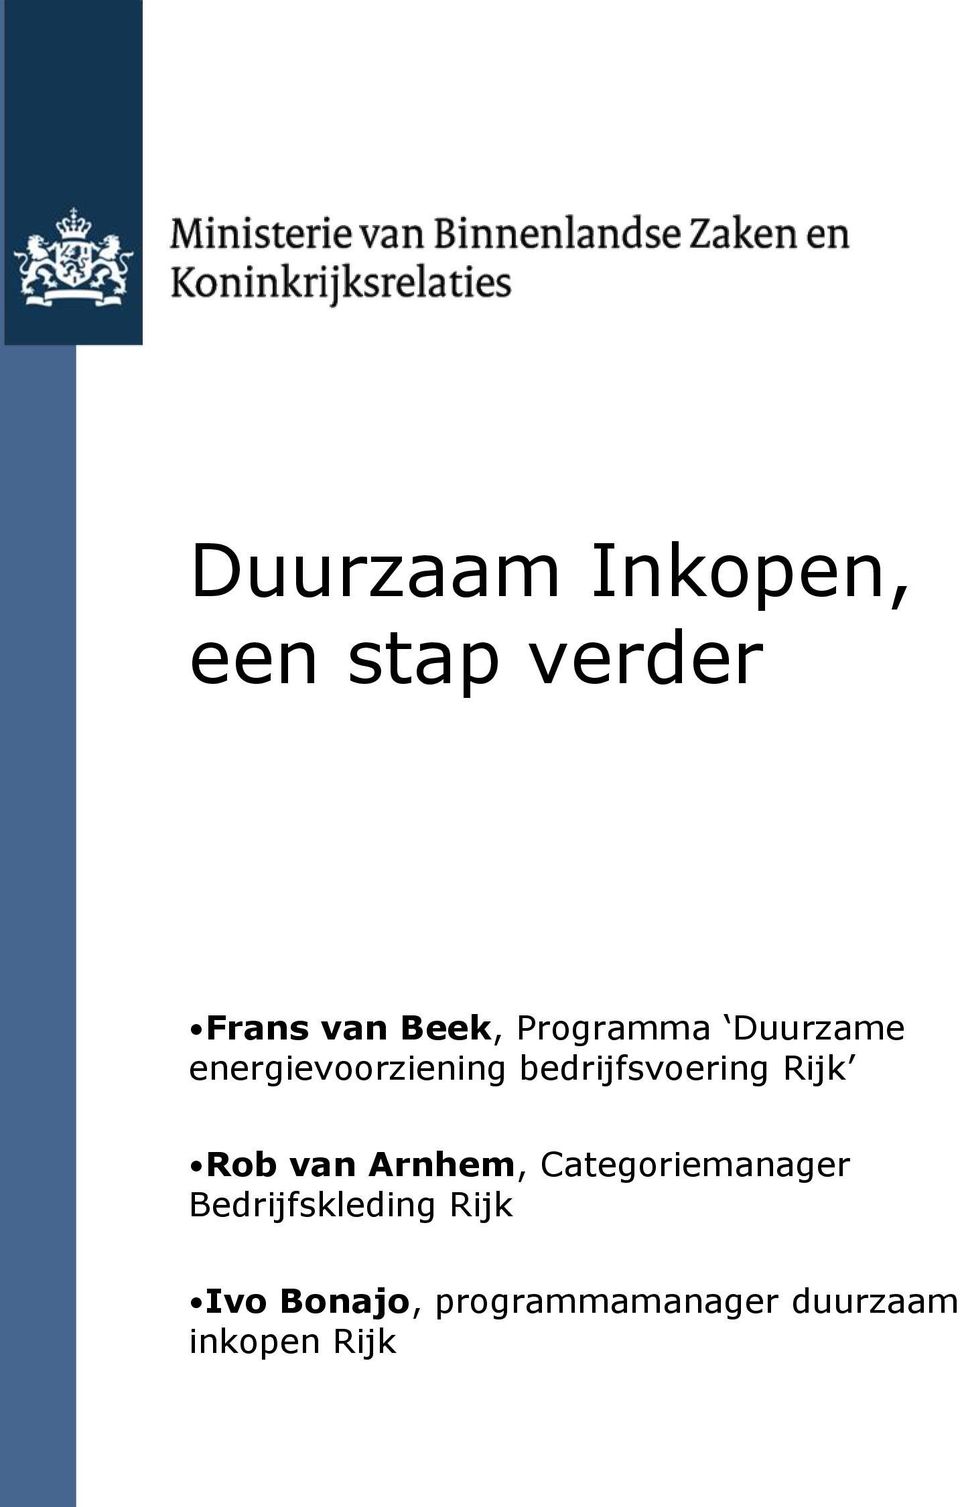 Rijk Rob van Arnhem, Categoriemanager Bedrijfskleding